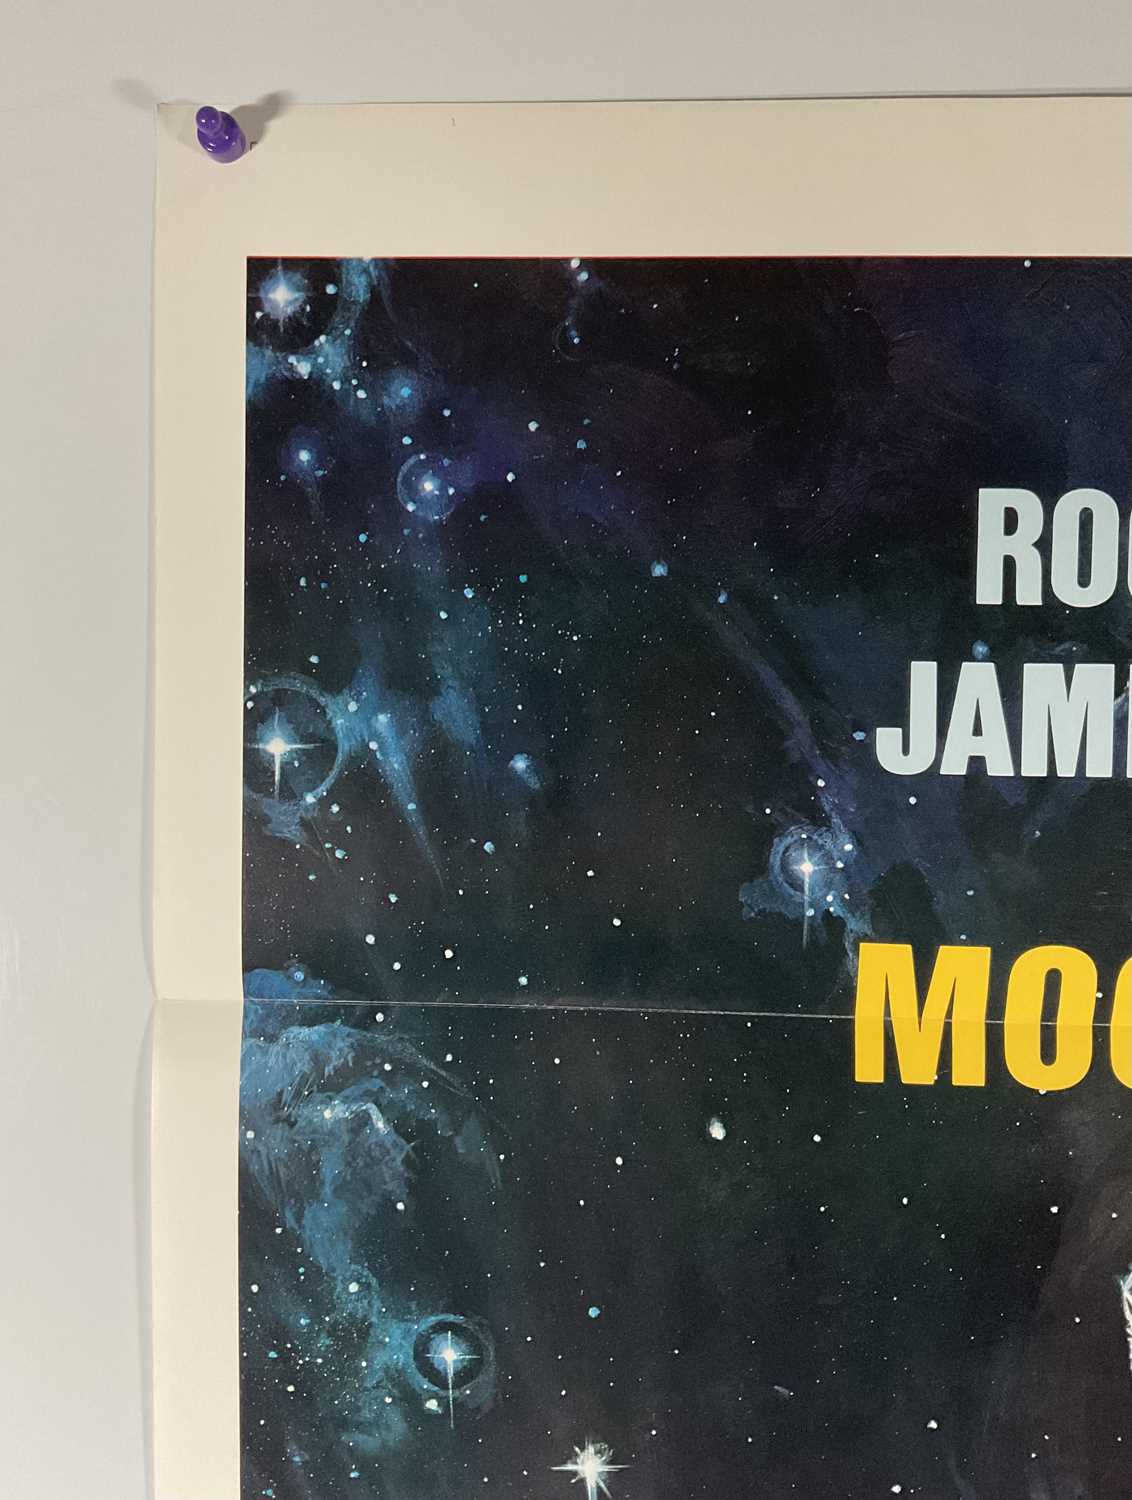 MOONRAKER (1979) International One sheet film poster, Roger Moore as James Bond with Dan Goozee - Image 3 of 6